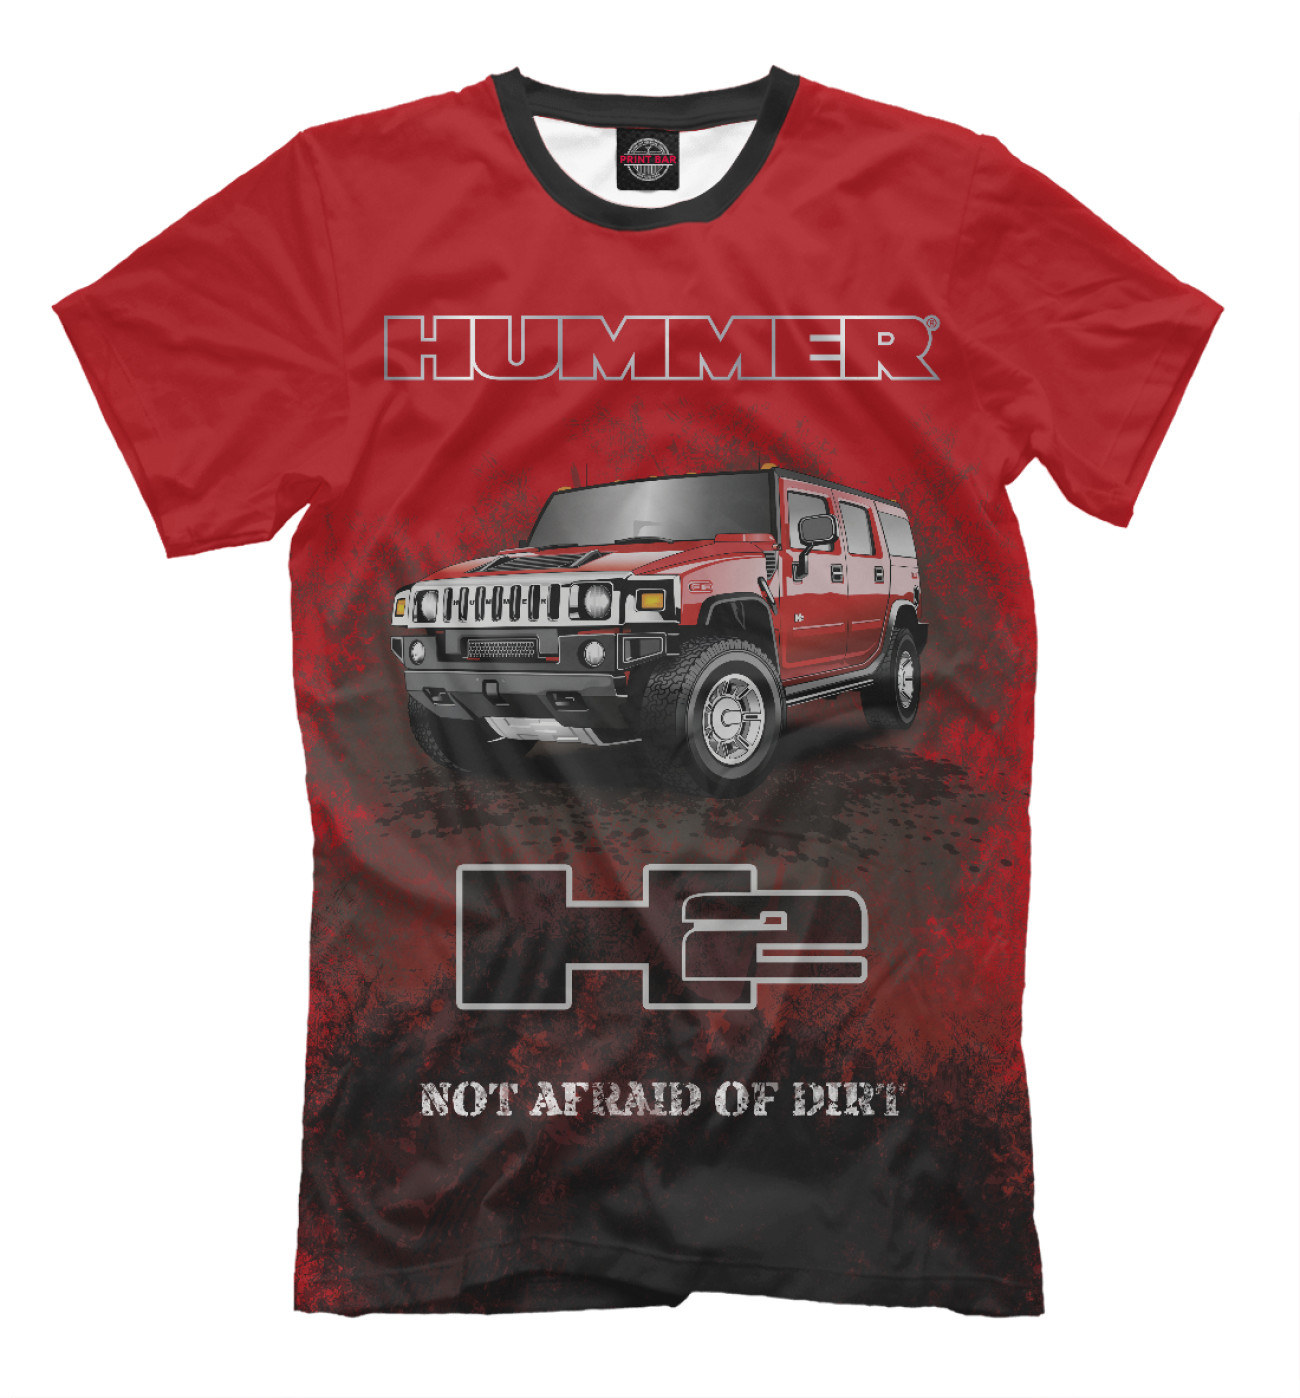 Мужская Футболка Hummer H2 Red, артикул: AUS-205114-fut-2